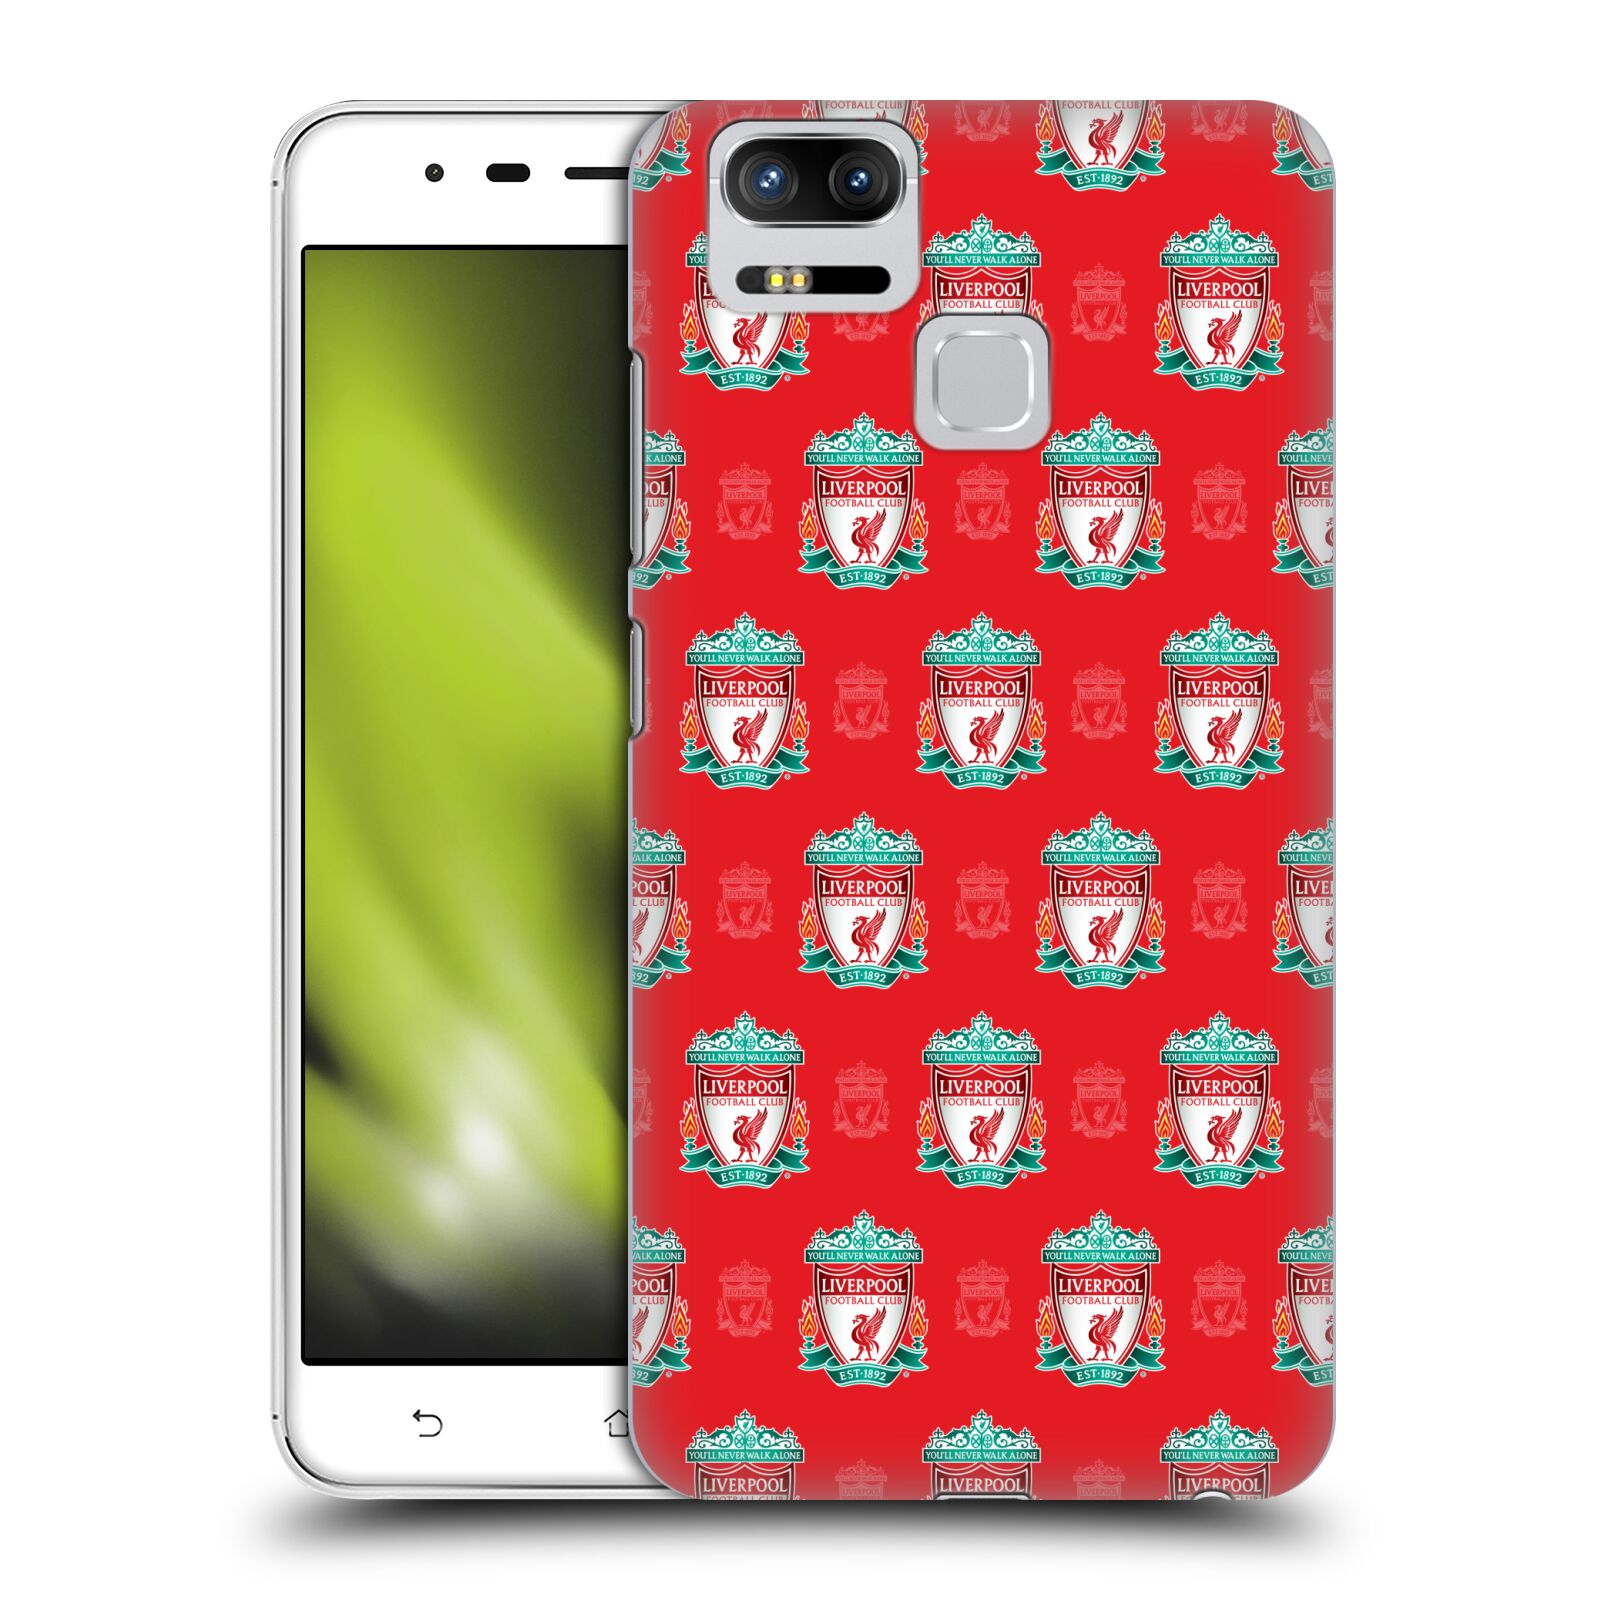 HEAD CASE plastový obal na mobil Asus Zenfone 3 Zoom ZE553KL Fotbalový klub Liverpool znak malý vzorkovaný červené pozadí